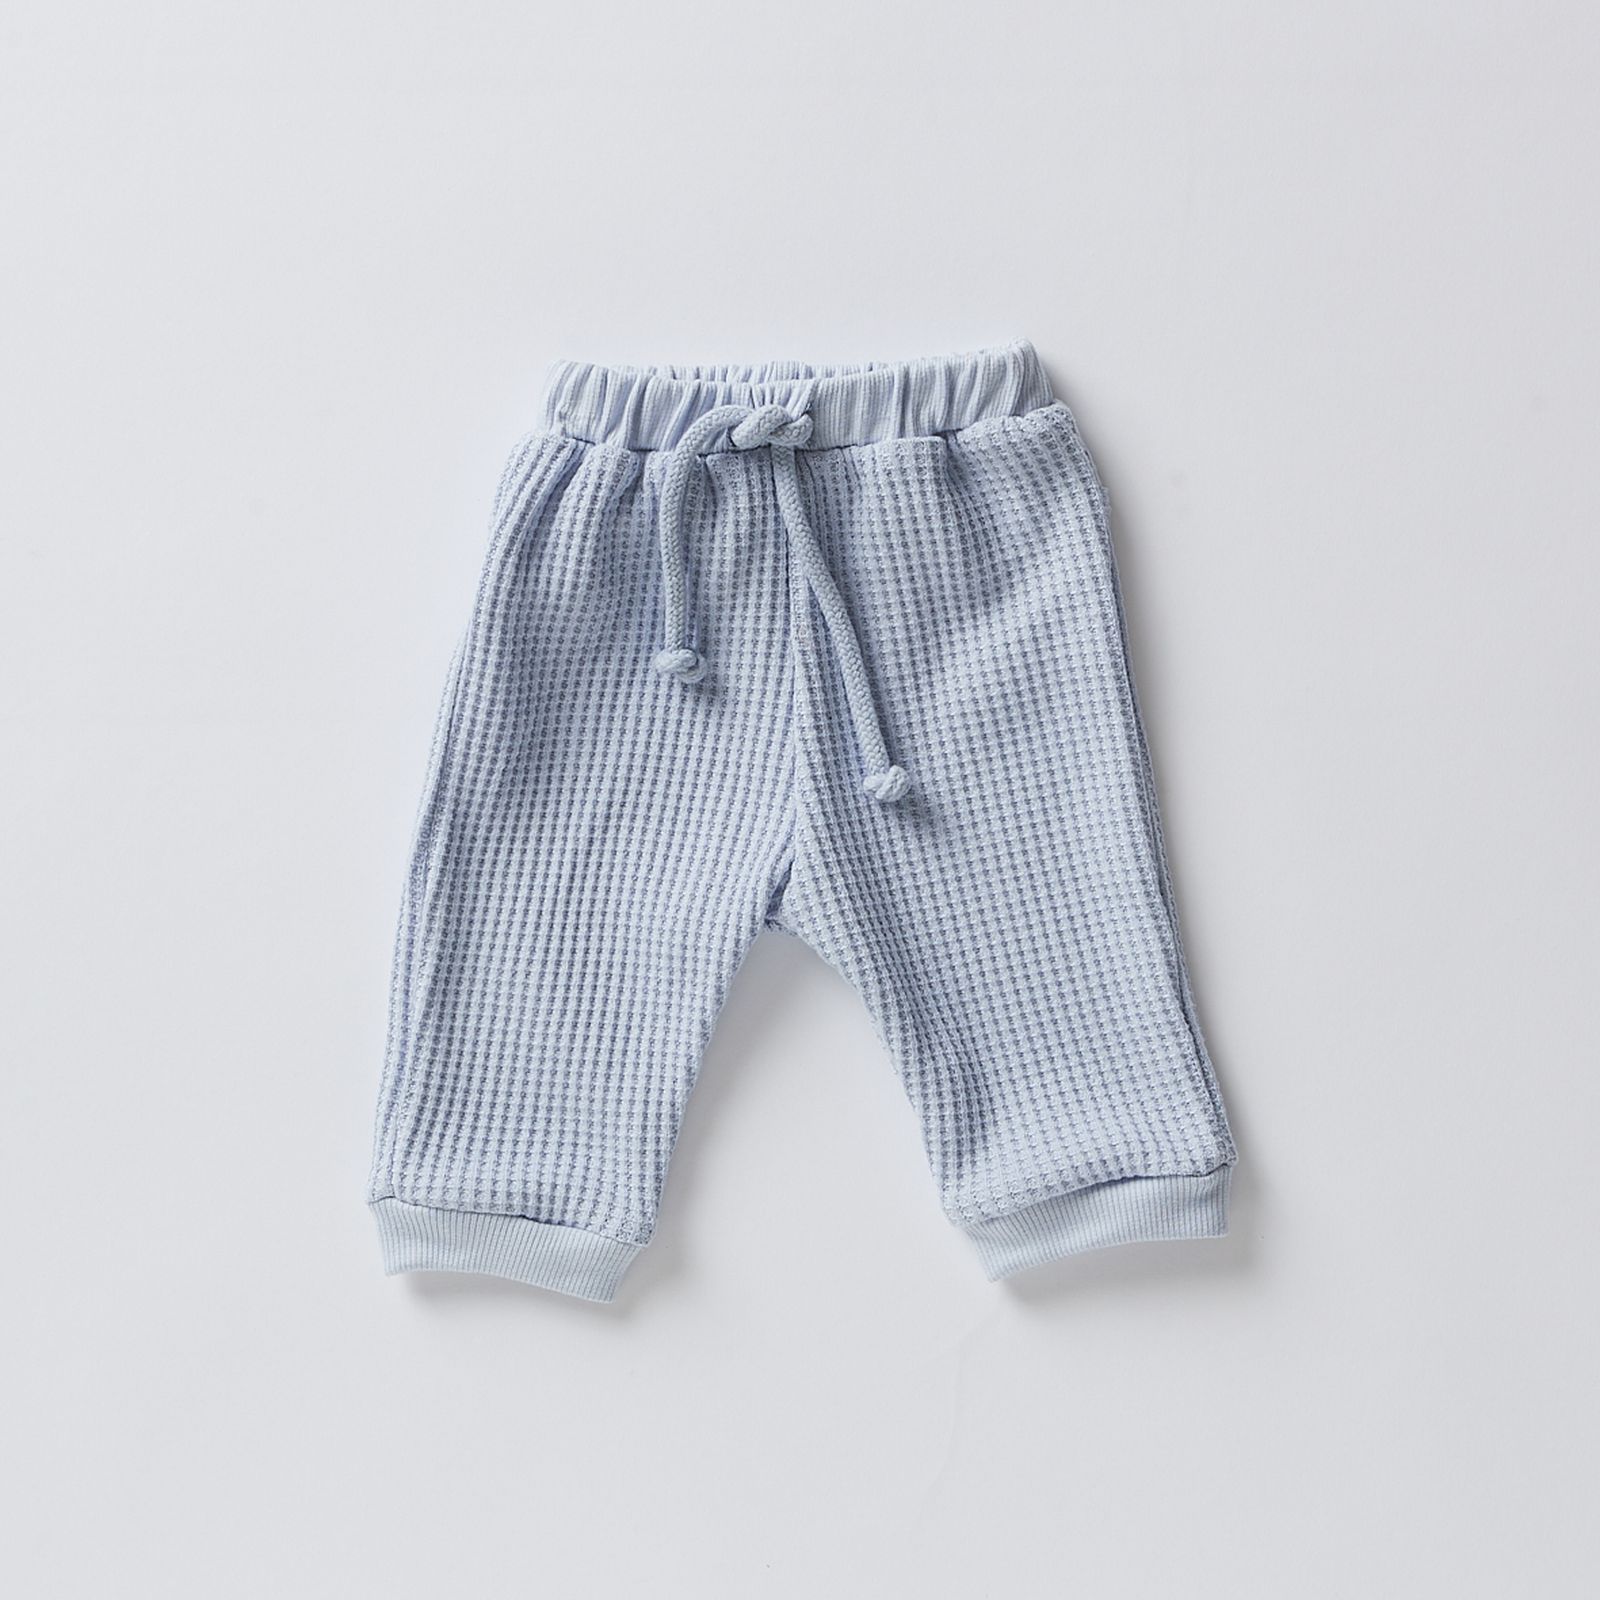 Pantalone Tasche Wafer: Praticità e Stile in Cotone 100% per Piccoli Avventurieri